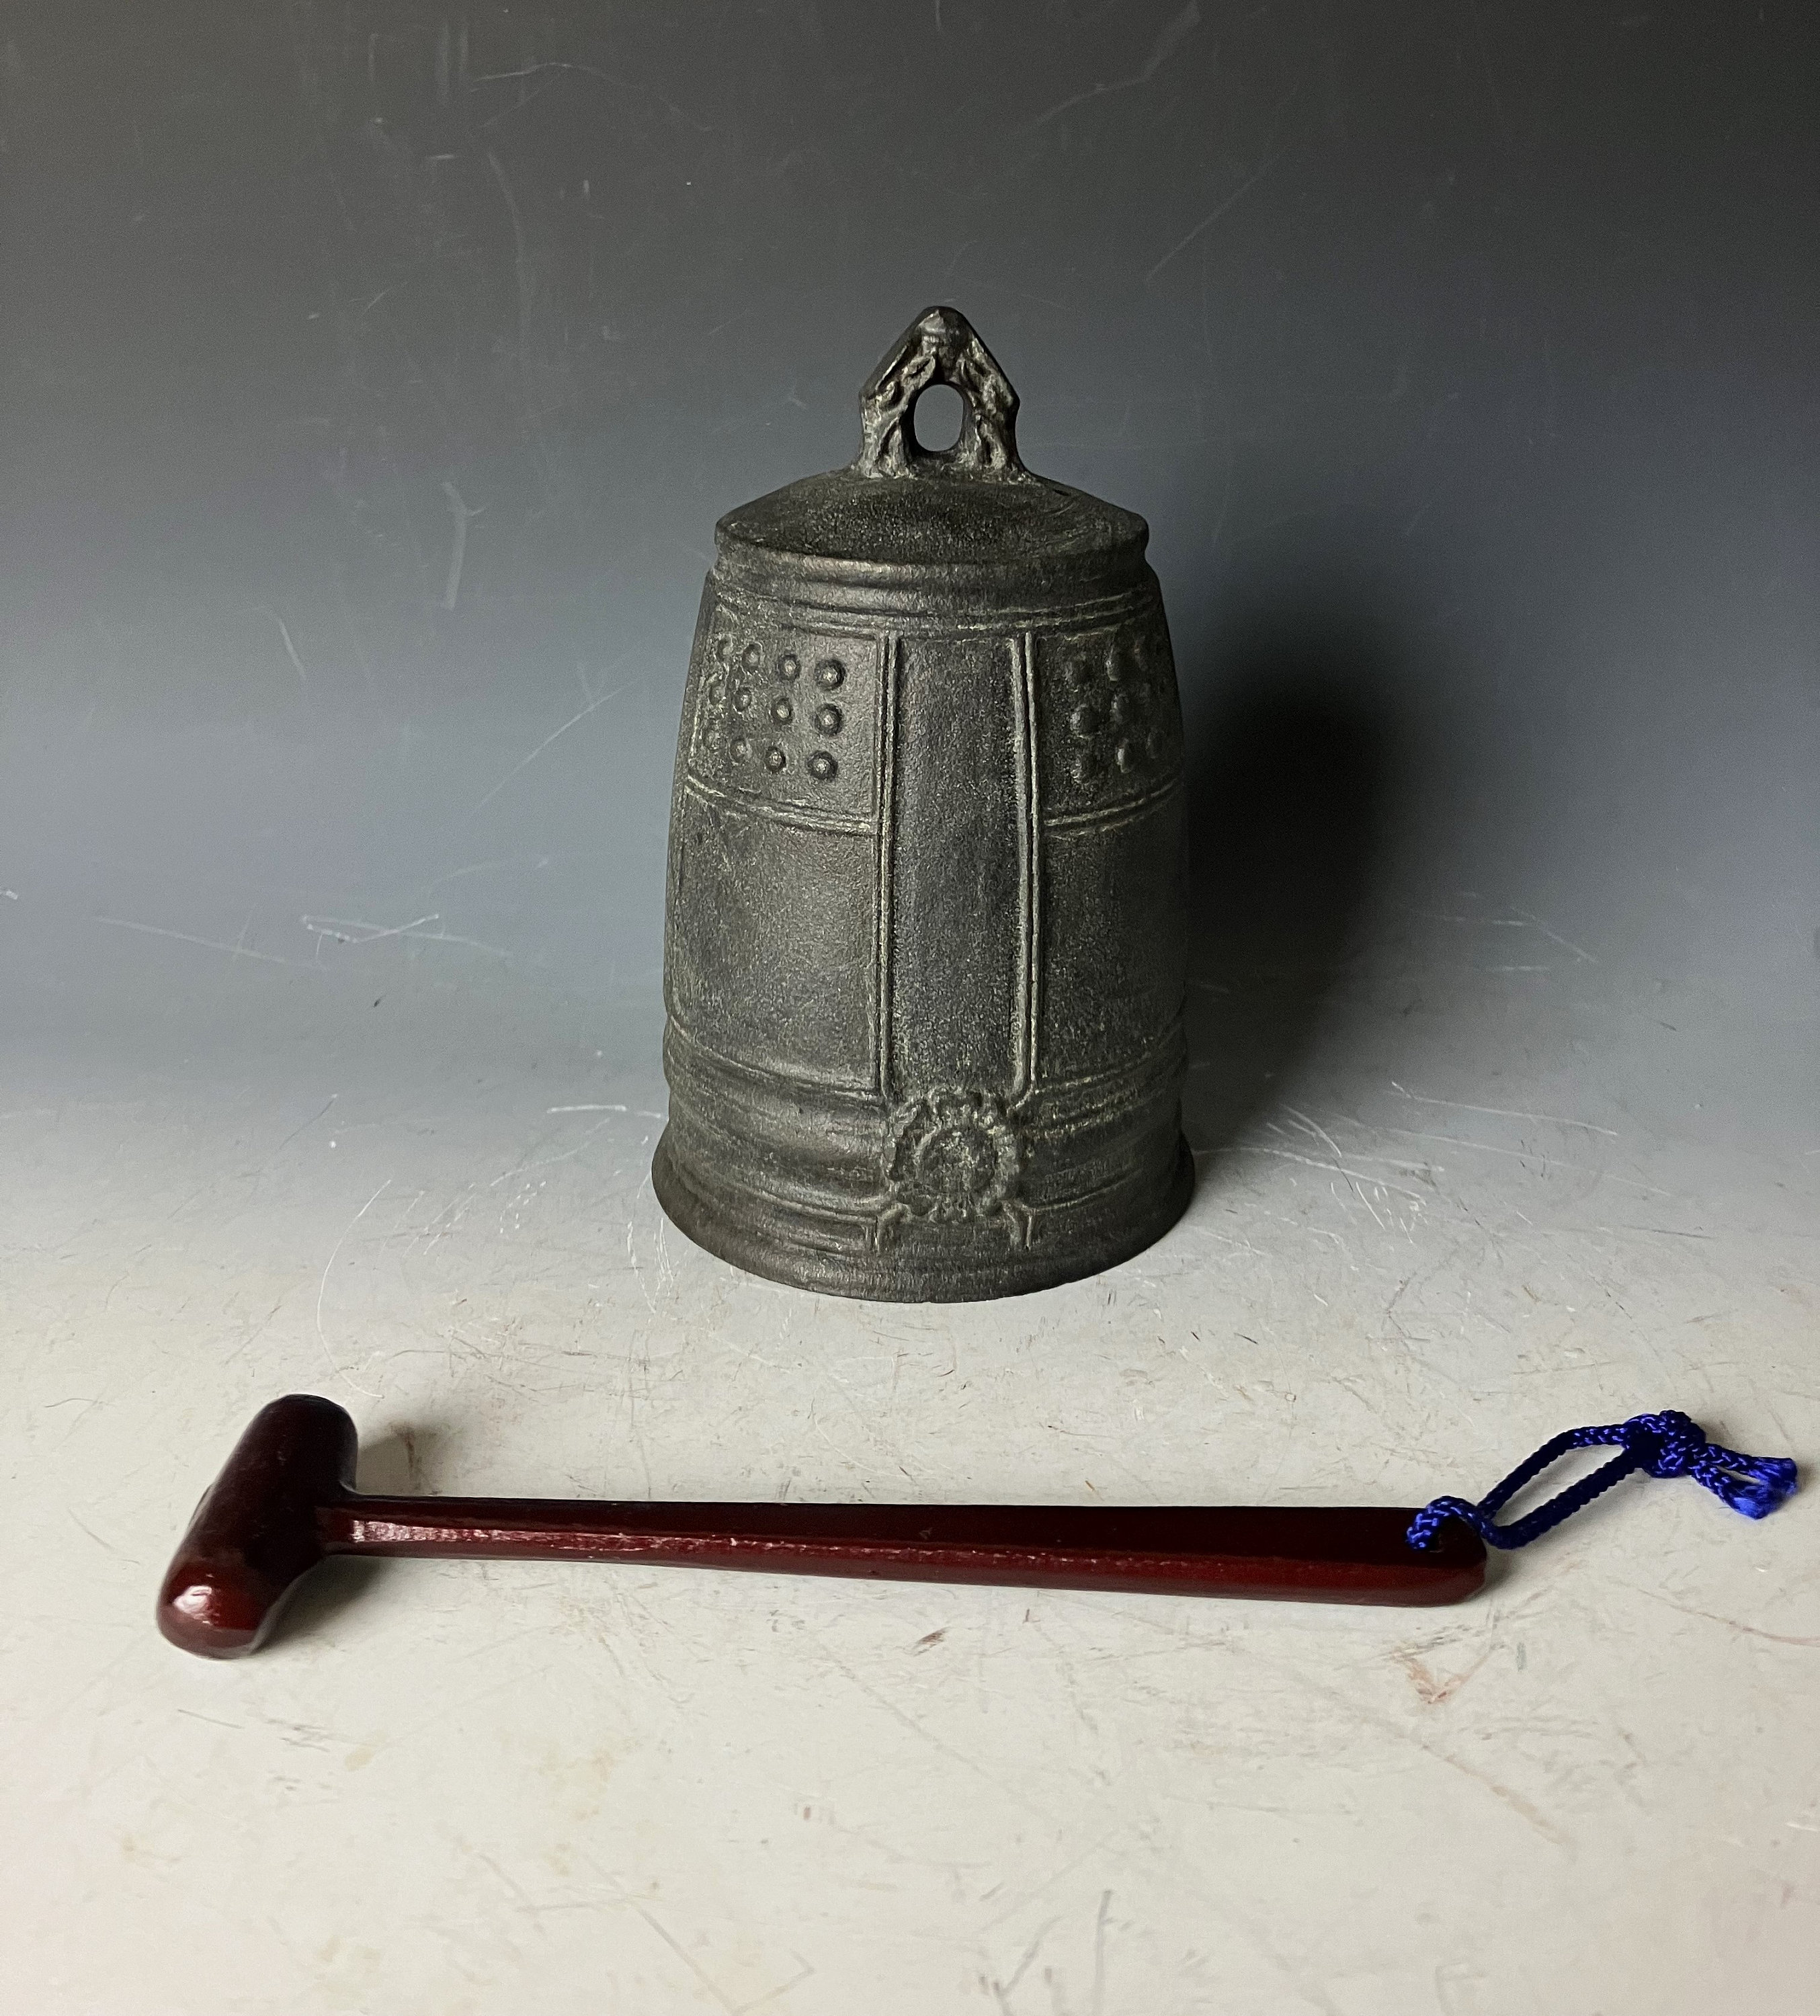 Antique Mini Brass Bells Copper Sculpture Pray Buddha Fengshui Bell  Invitation Buddhism Chinese Guanyin Bell India